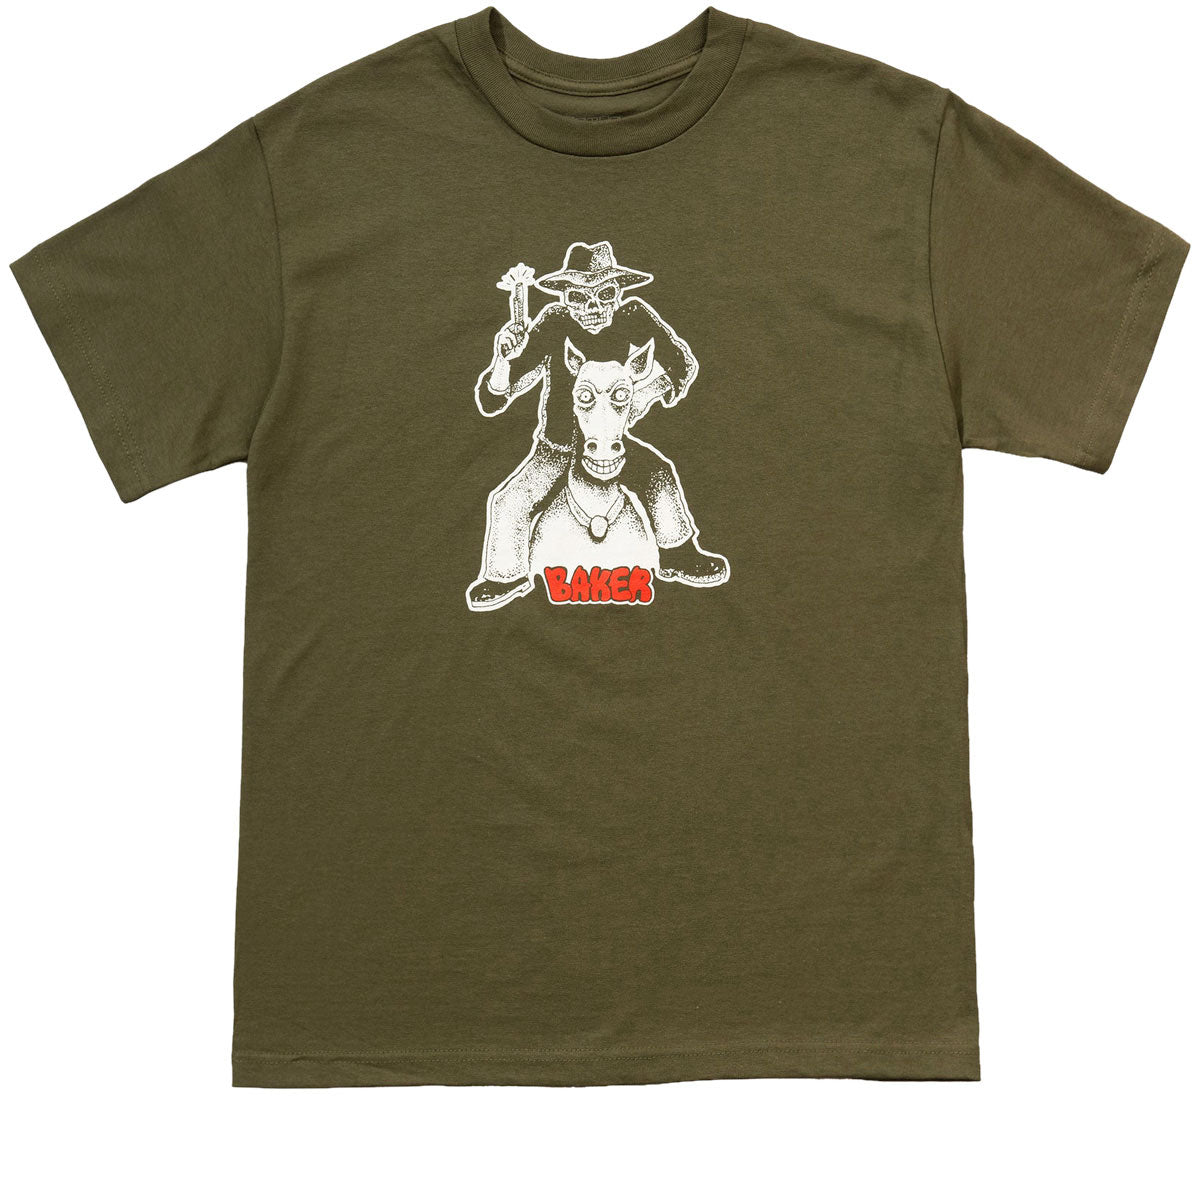 Baker Big Iron T-Shirt - Military Green image 1